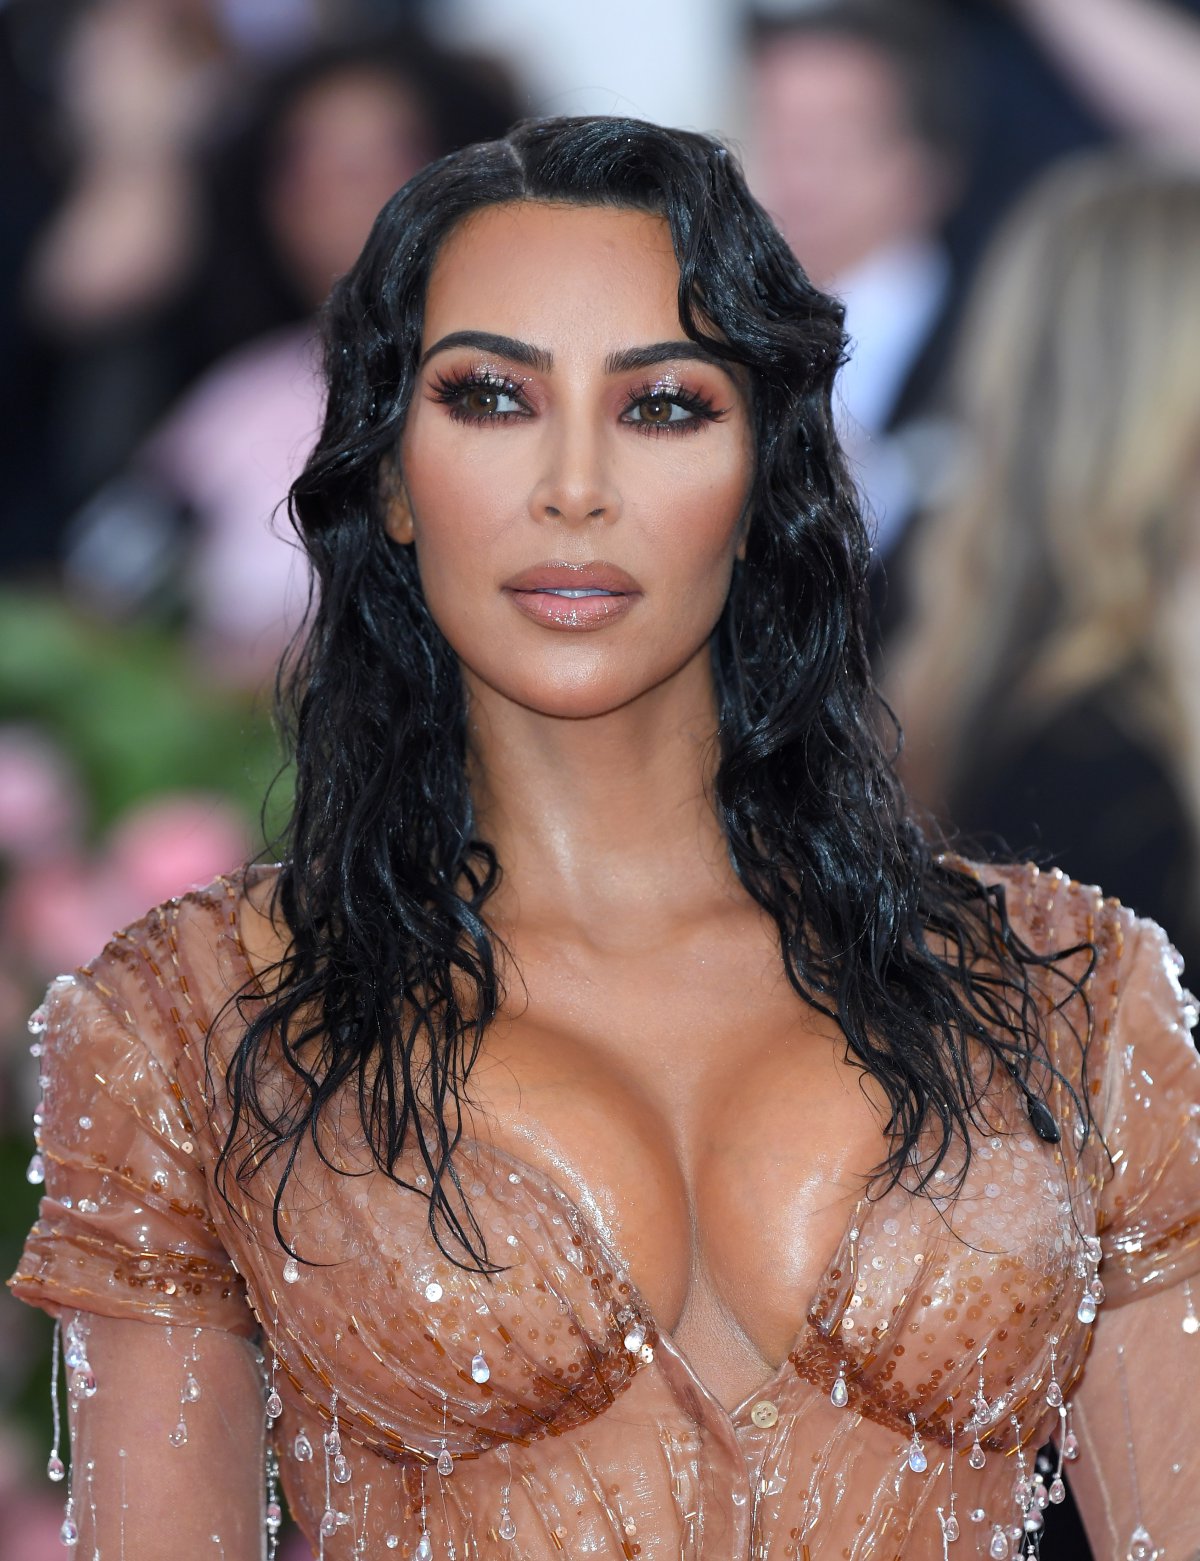 10. Kim Kardashian